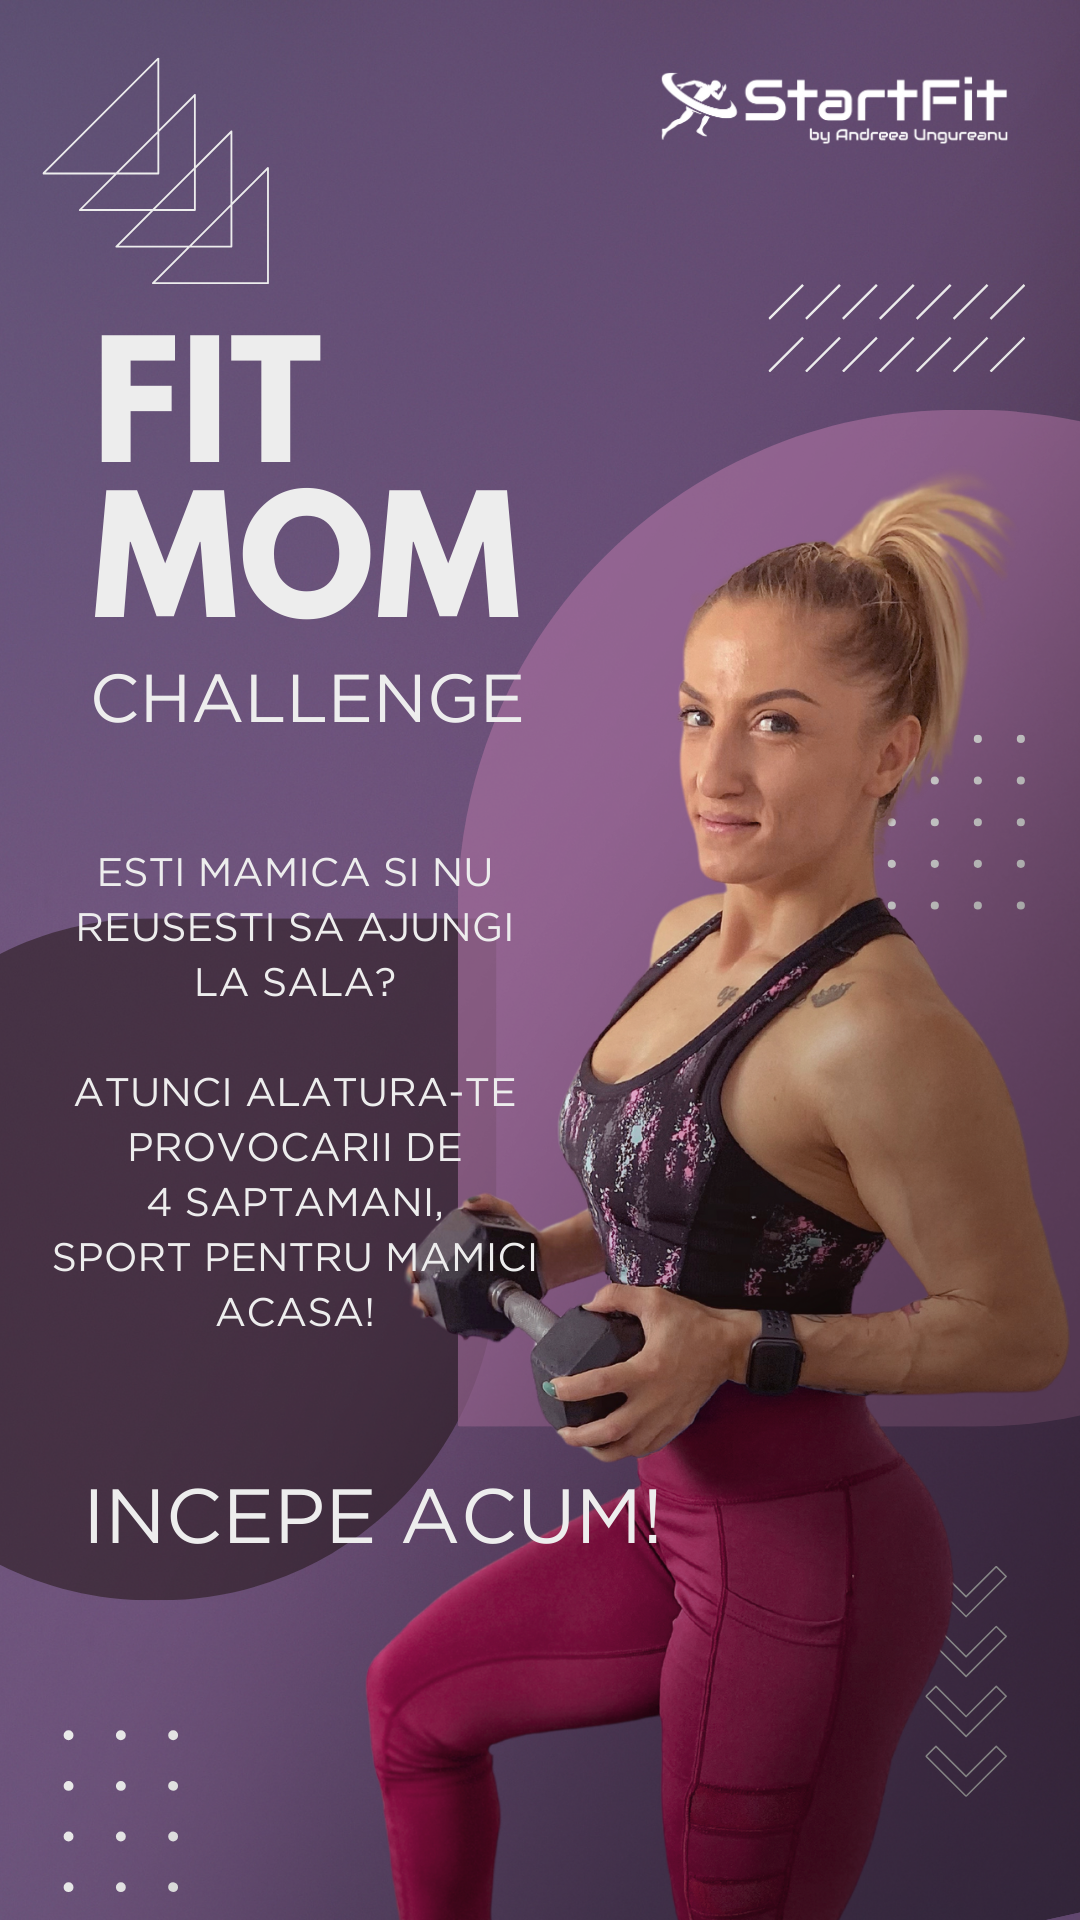 provocare-fit-mom-antrenament-acasa-4-saptamani-startfit-andreea-ungureanu